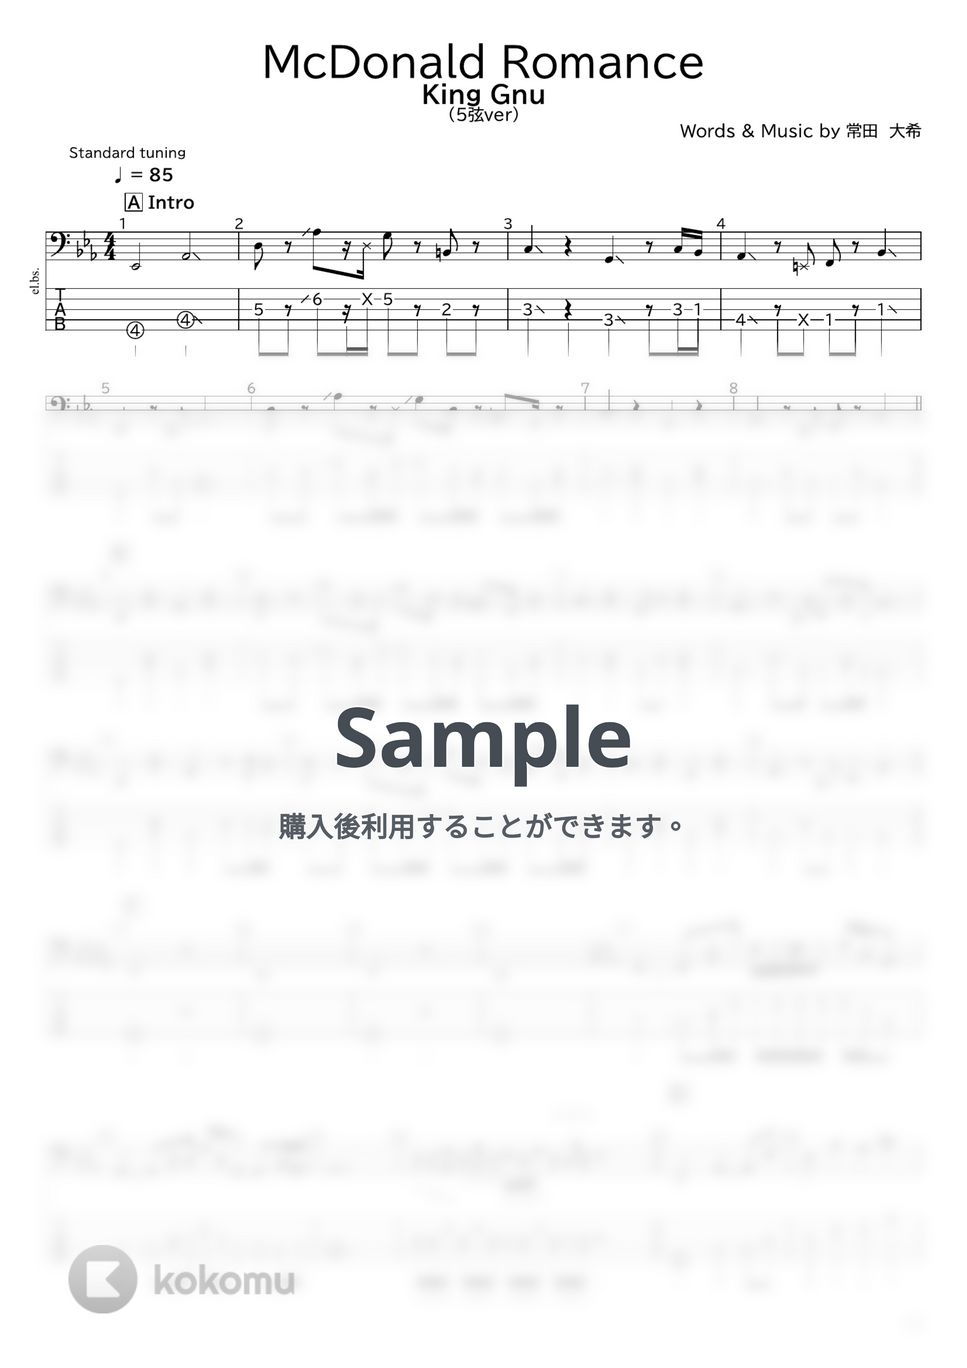 King Gnu - McDonald Romance(5弦ver) by たぶべー@財布に優しいベース用楽譜屋さん